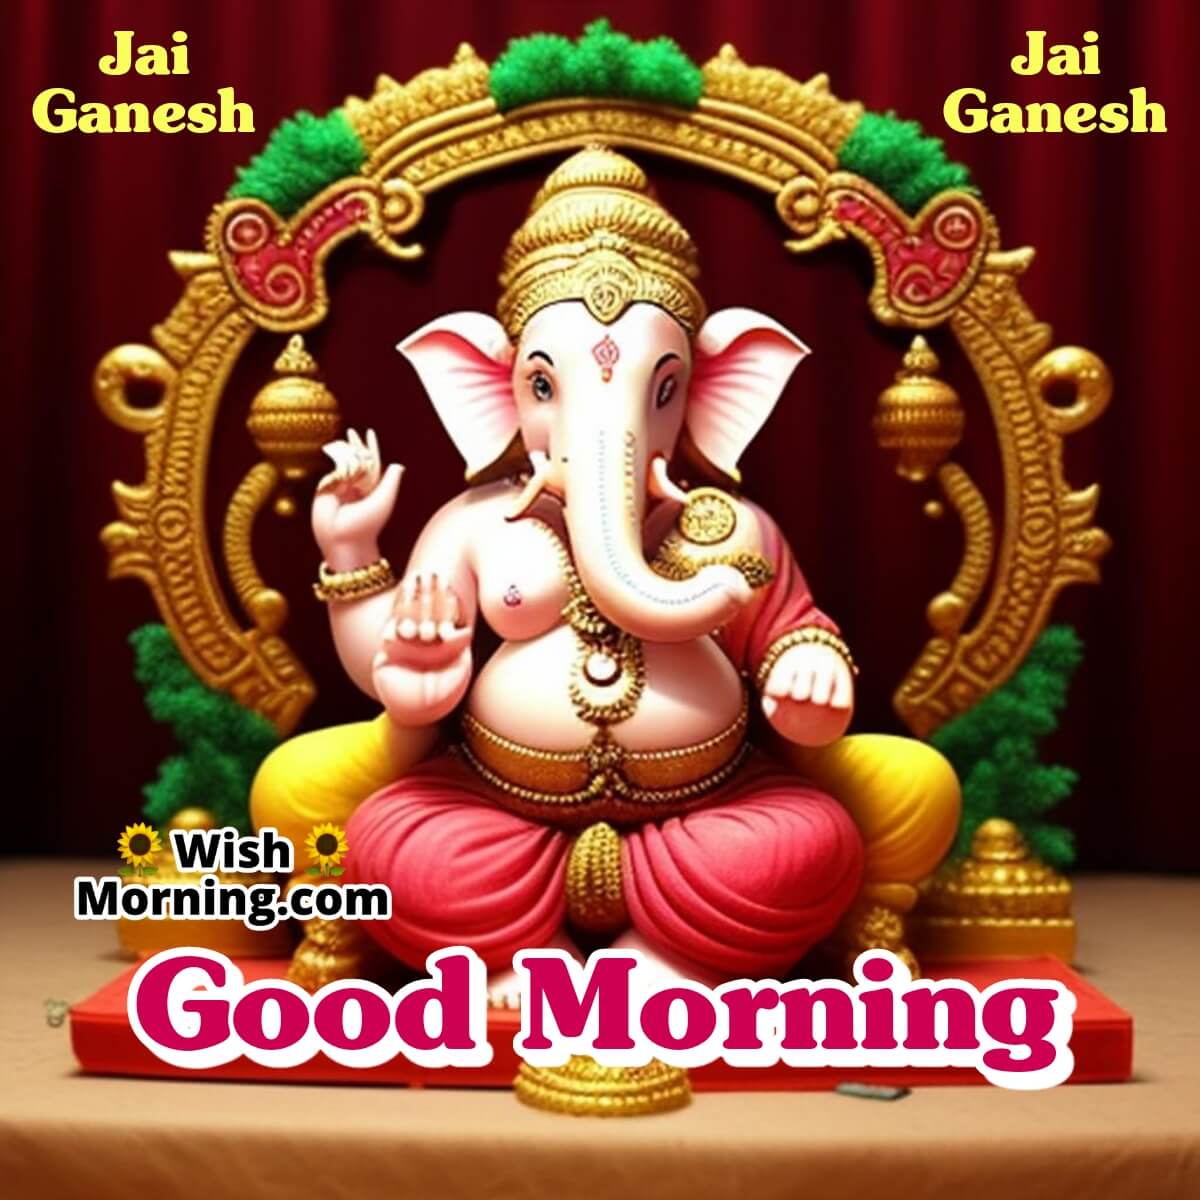 Good Morning Jai Ganesh